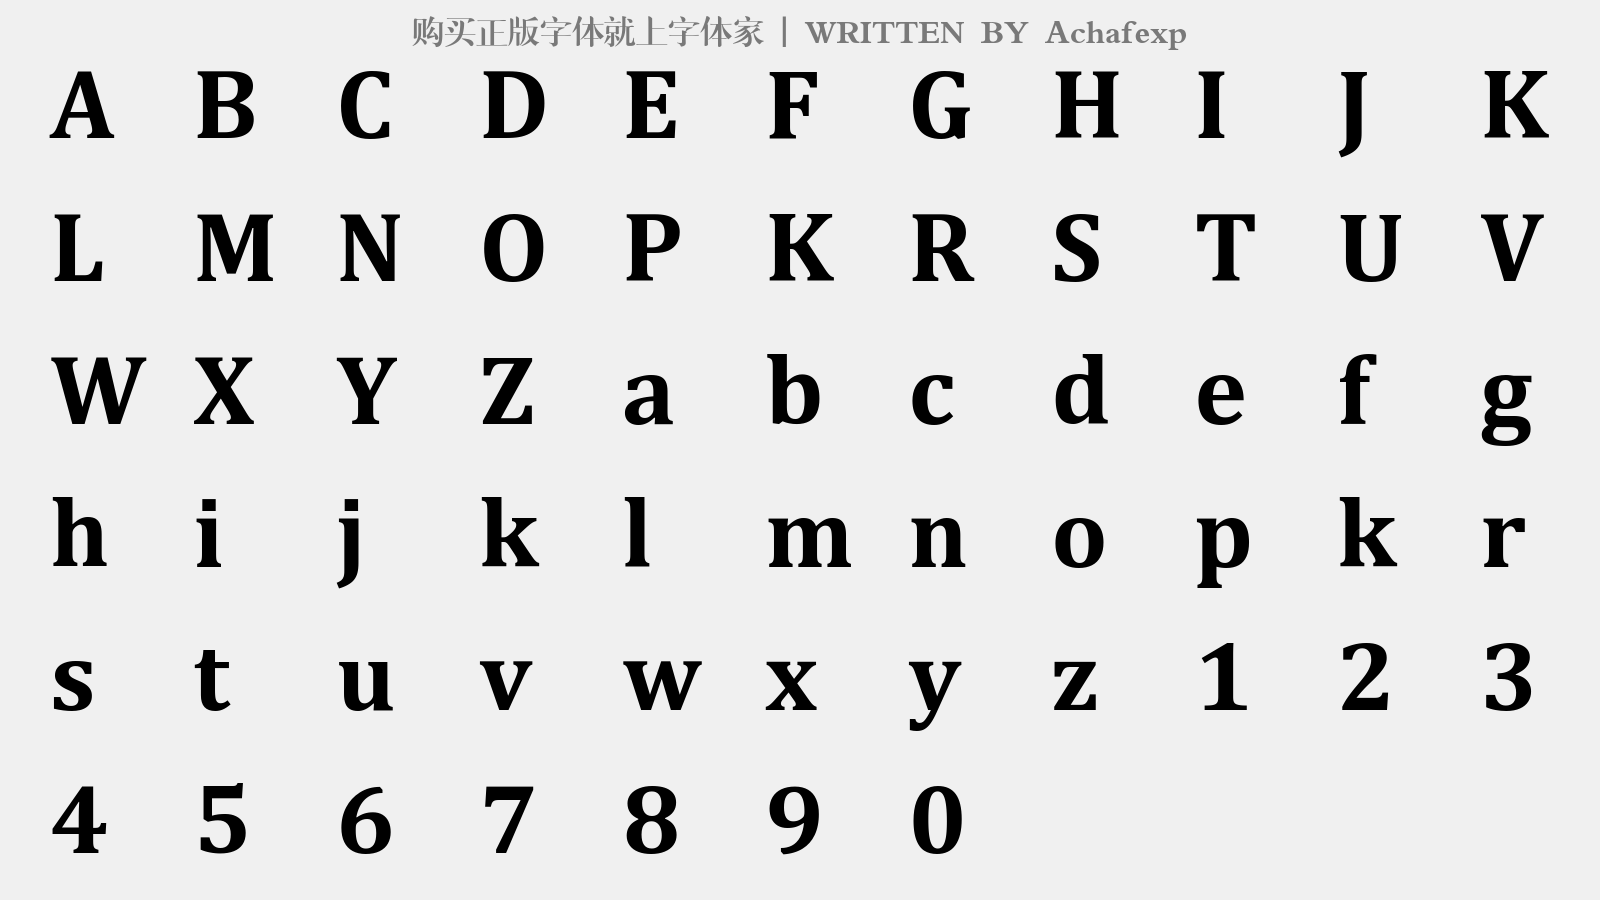 Achafexp - 大写字母/小写字母/数字